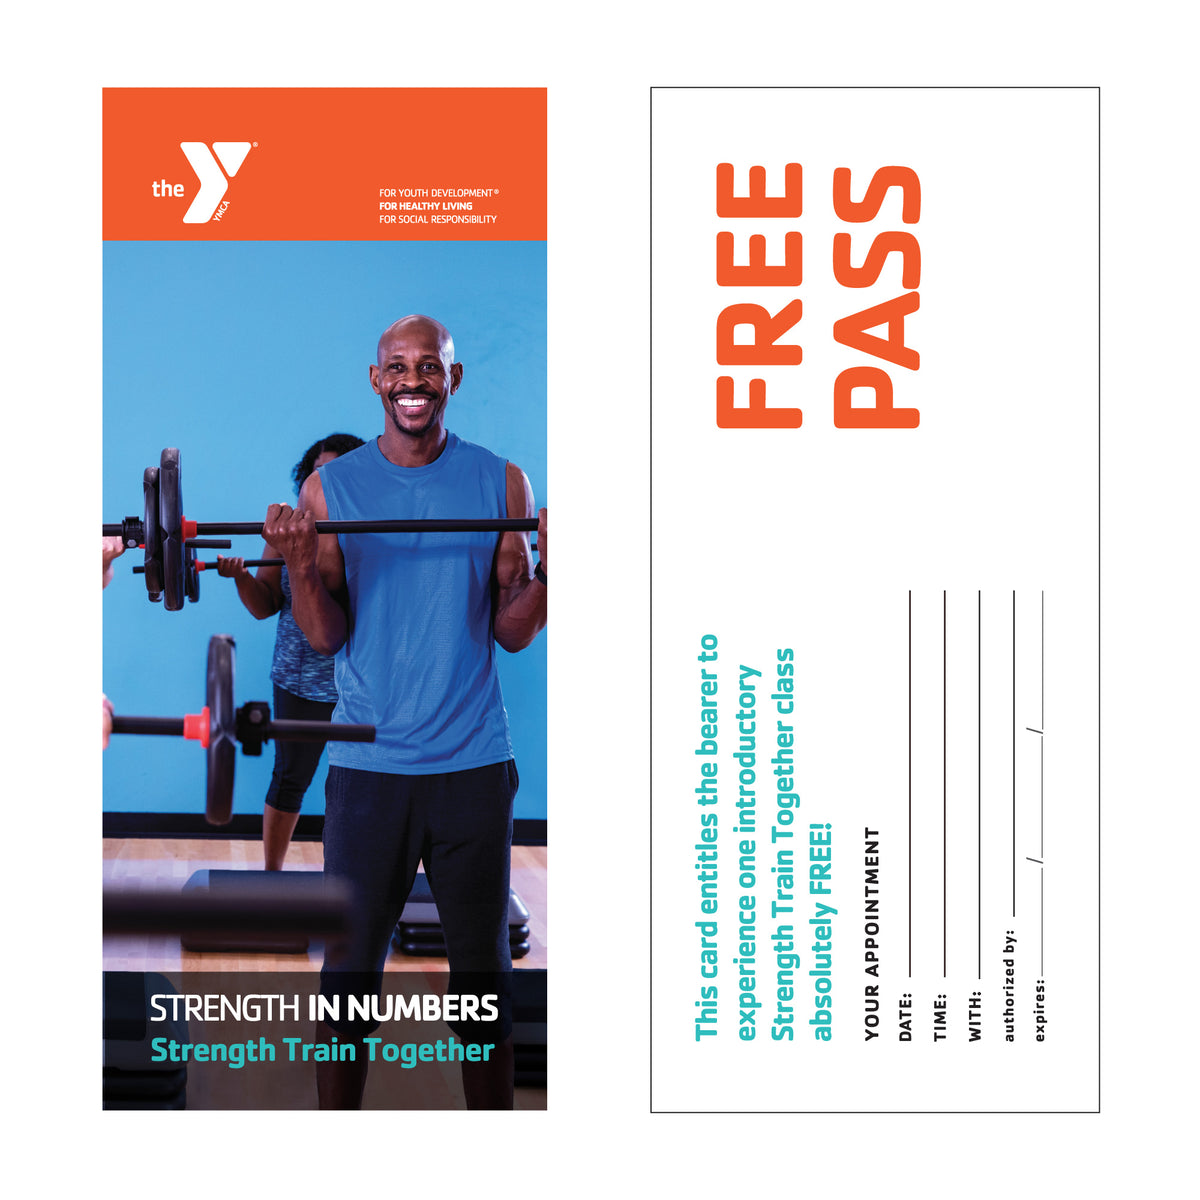 Free fitness class passes